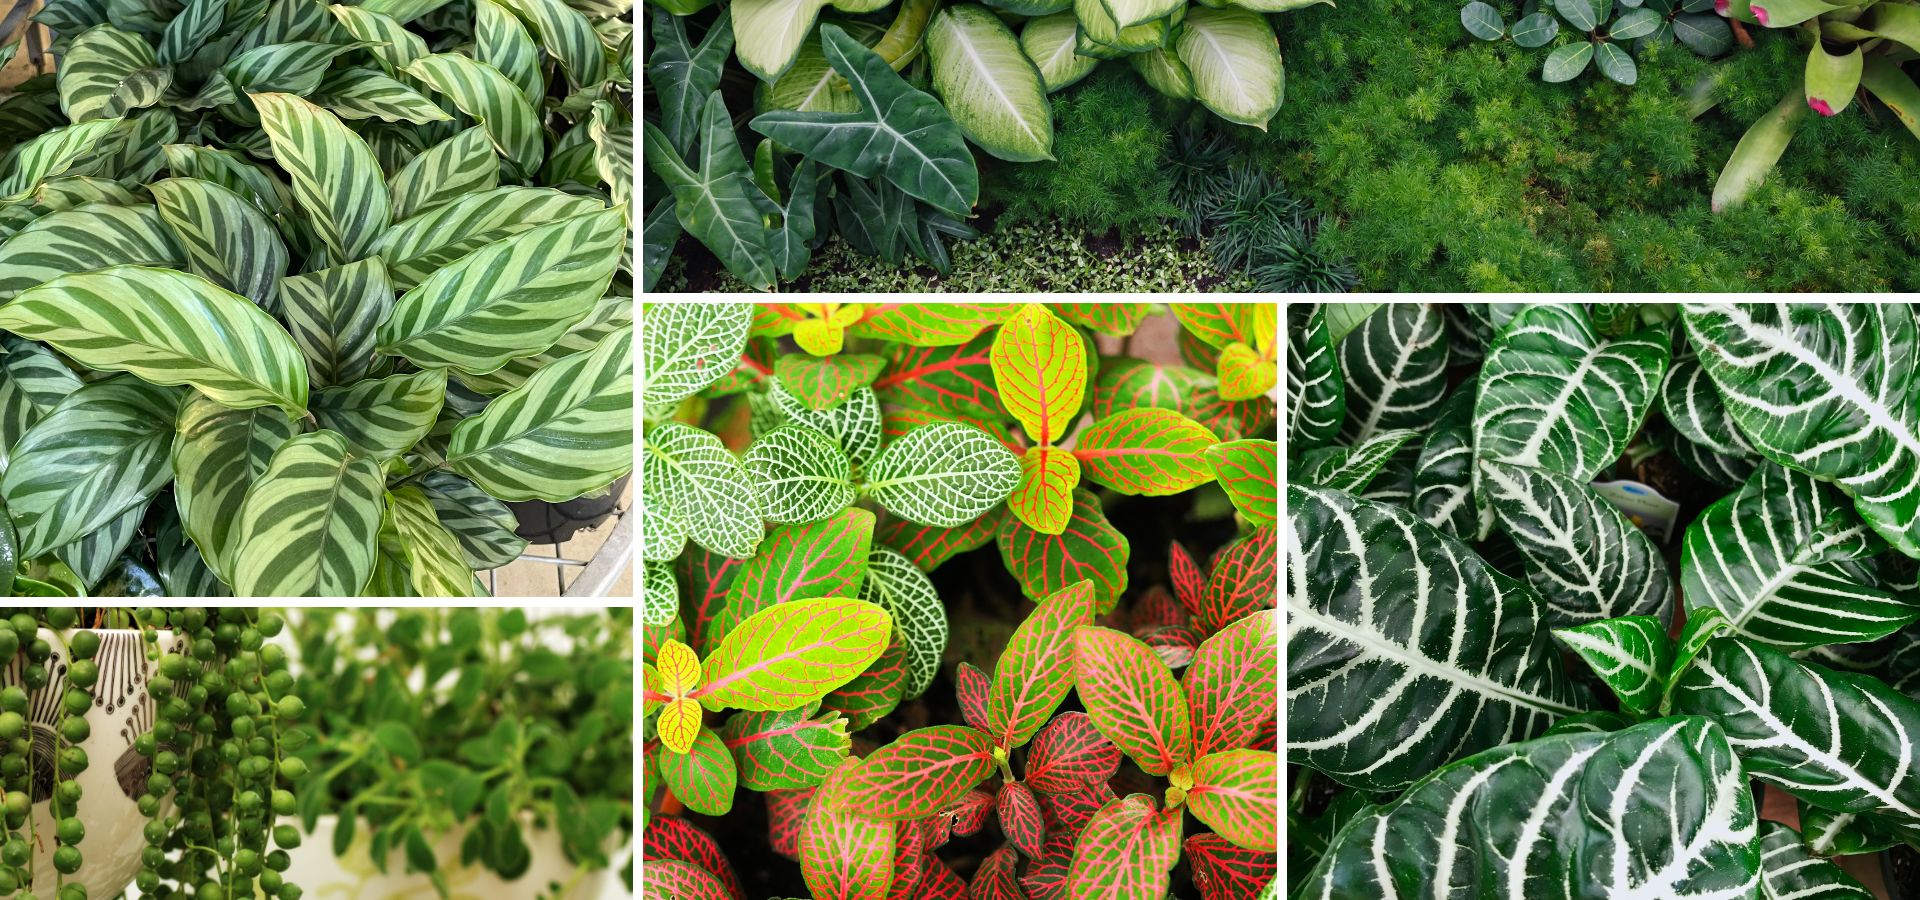 Legana Plants Plus - Grow With Us